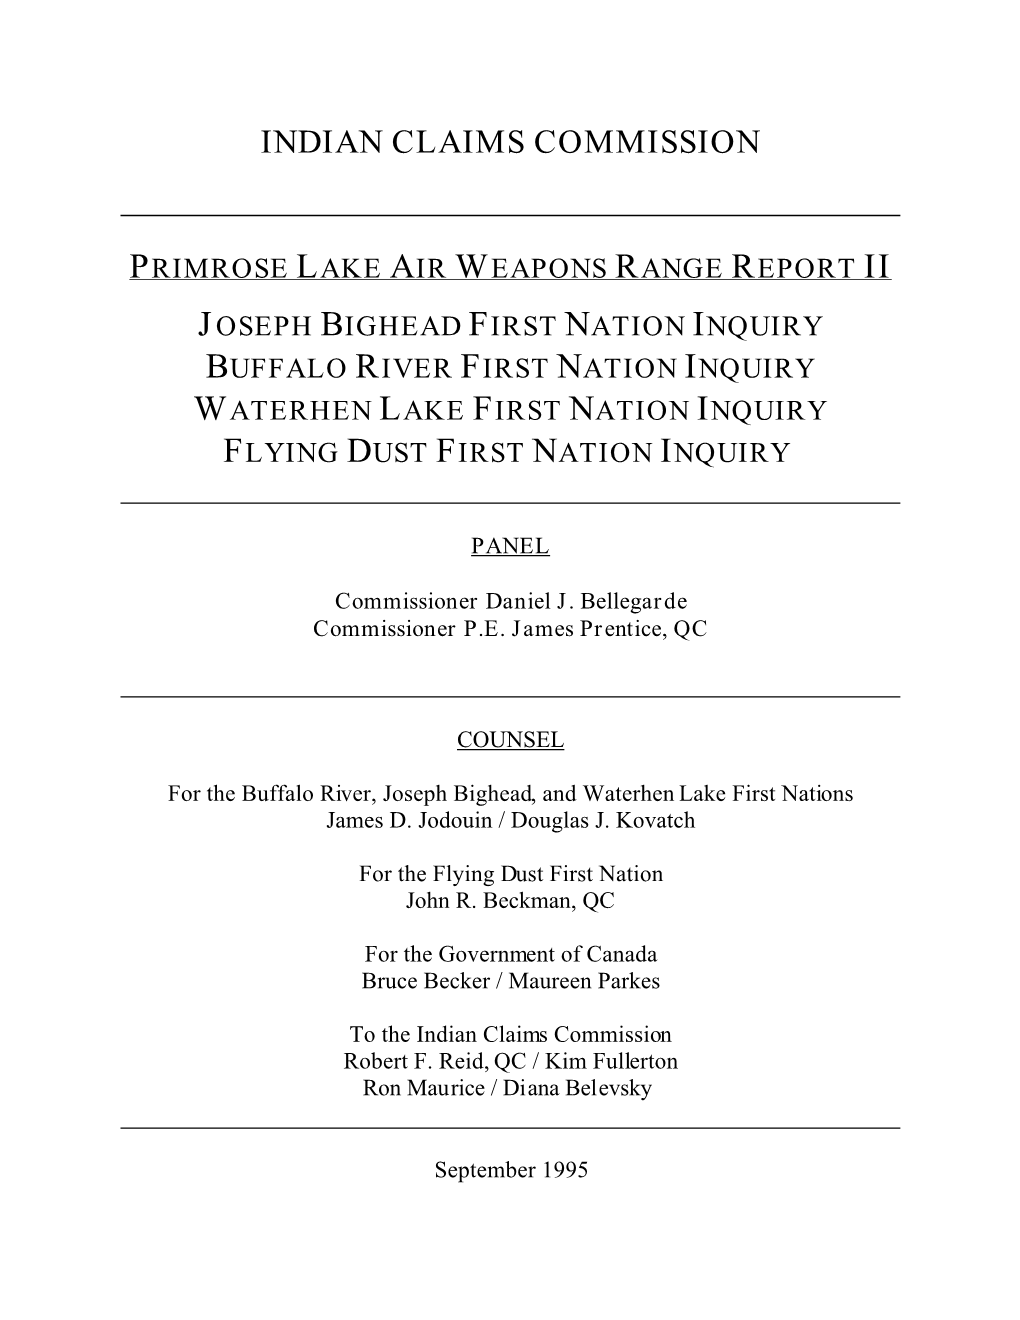 Primrose Lake Air Weapons Range II, Joseph Bighead Inquiry / Buffalo